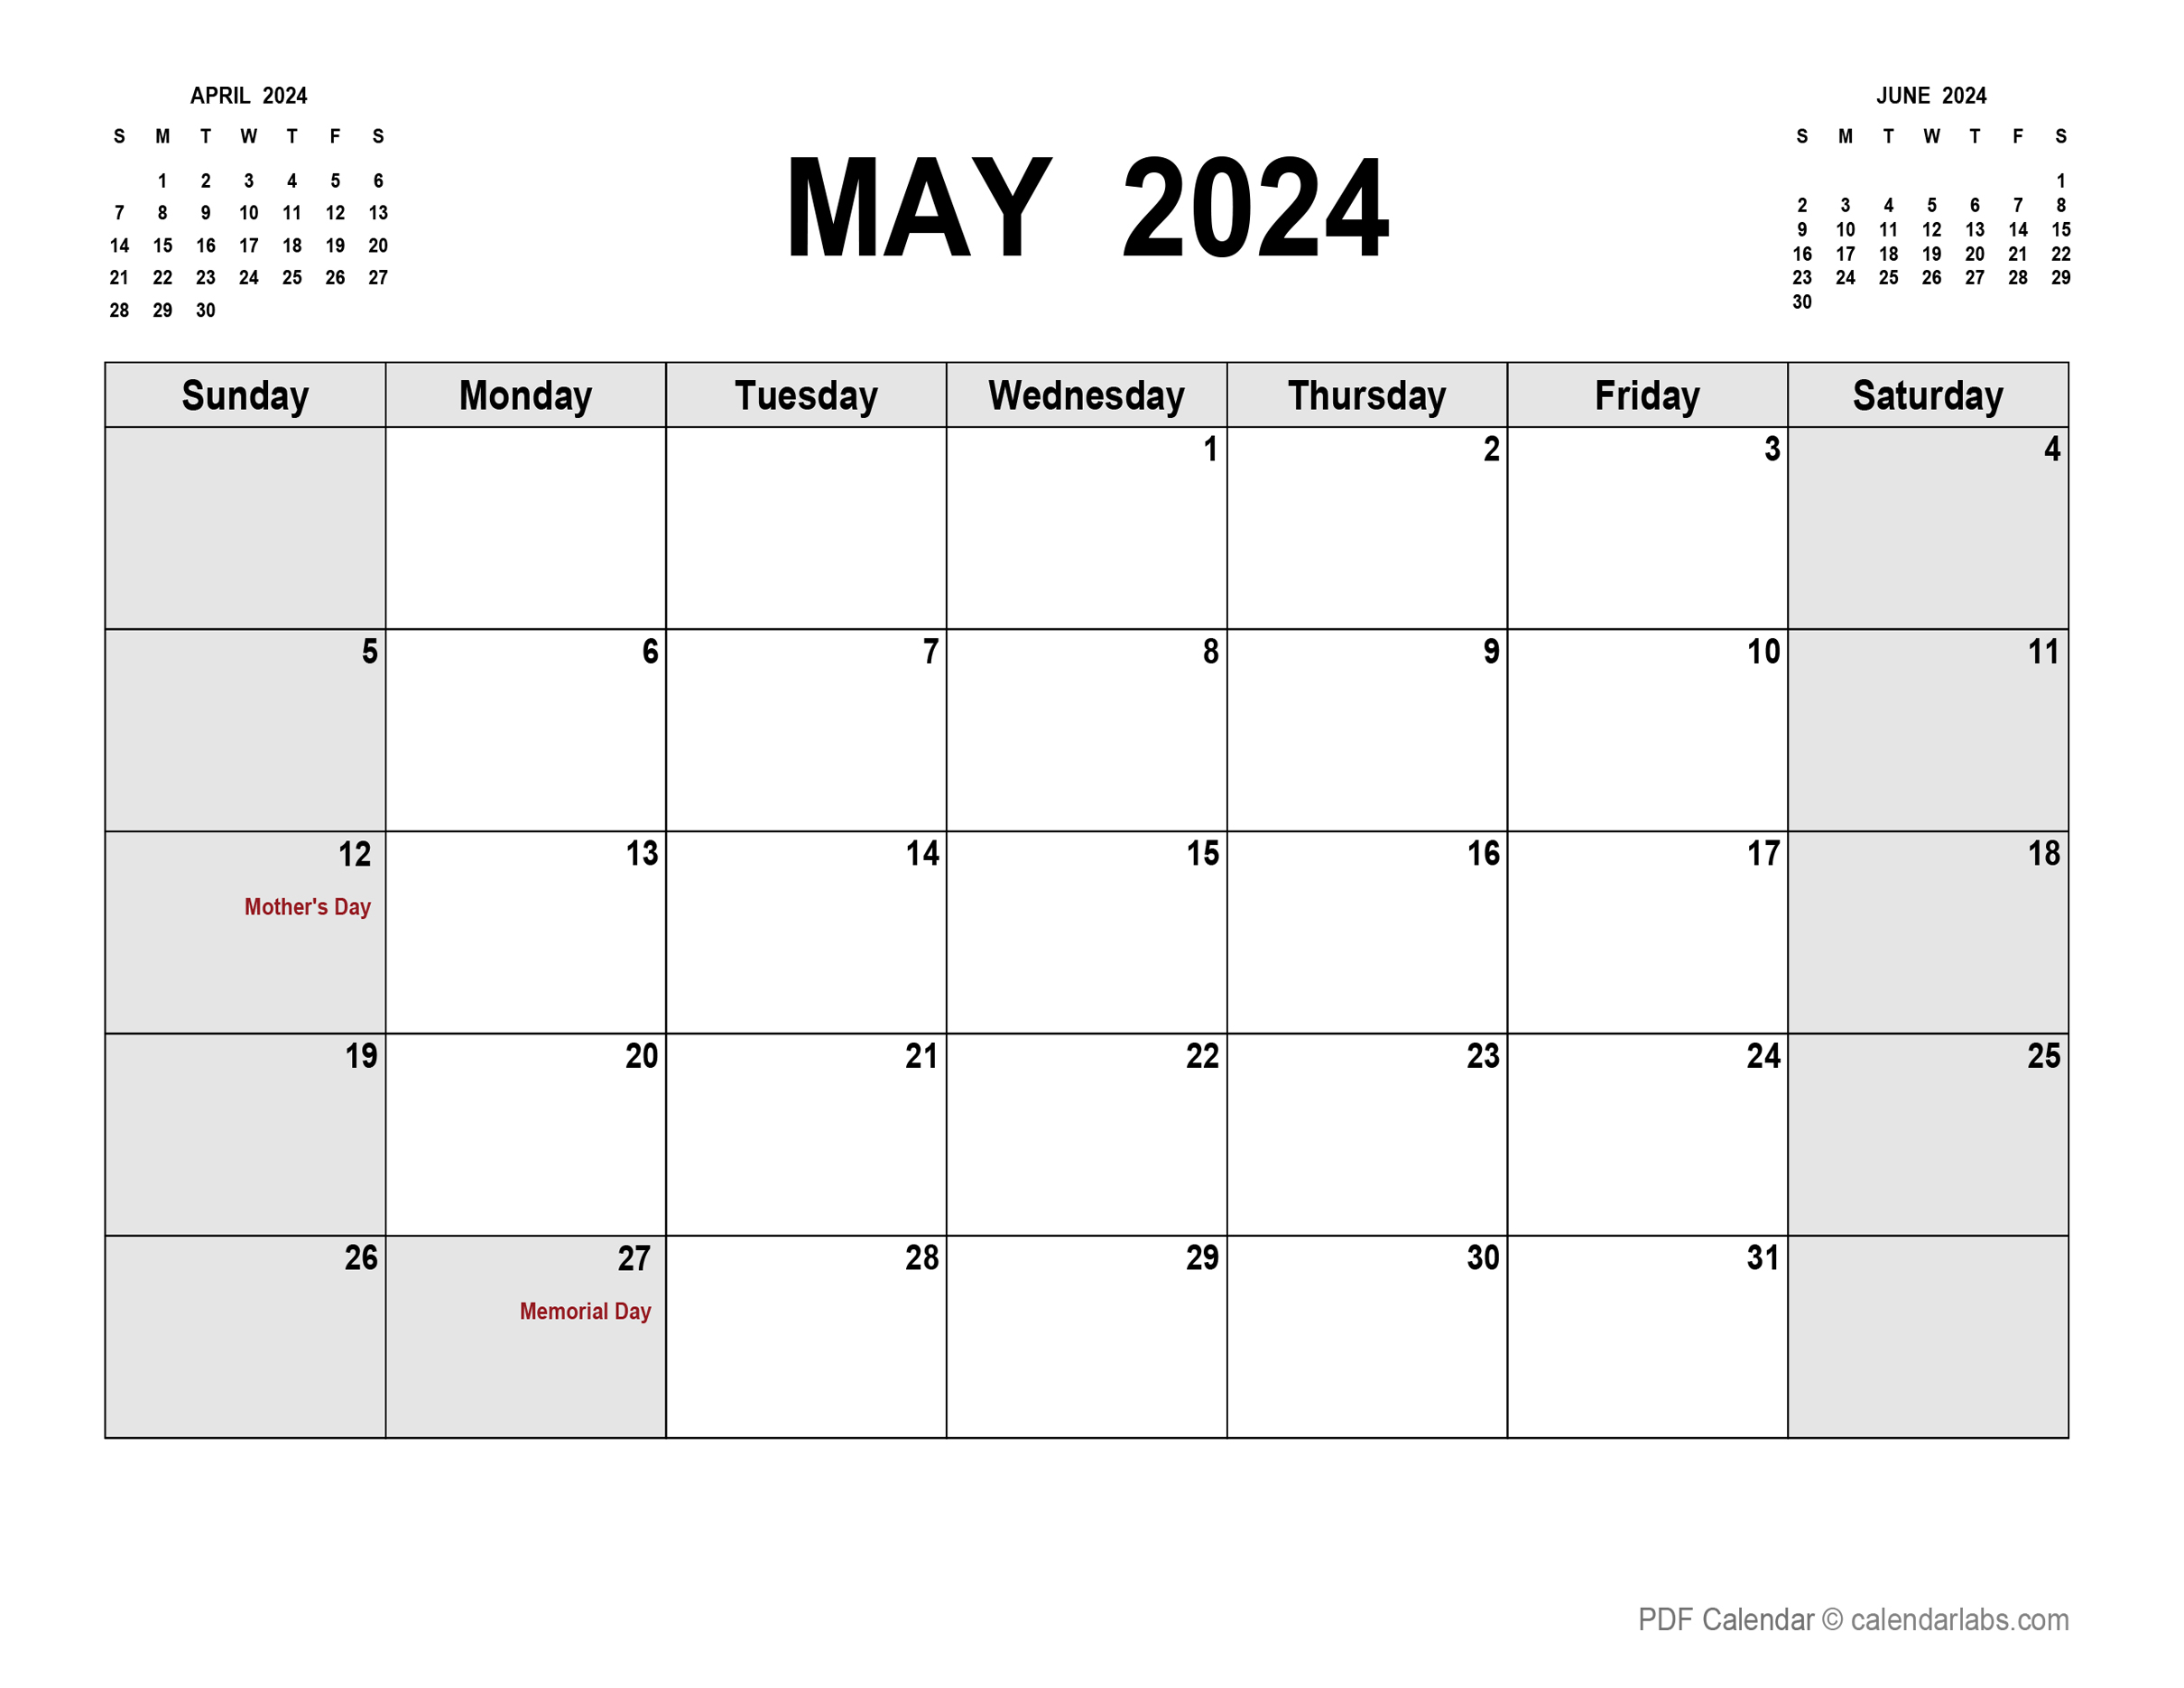 May 2024 Calendar with Holidays CalendarLabs